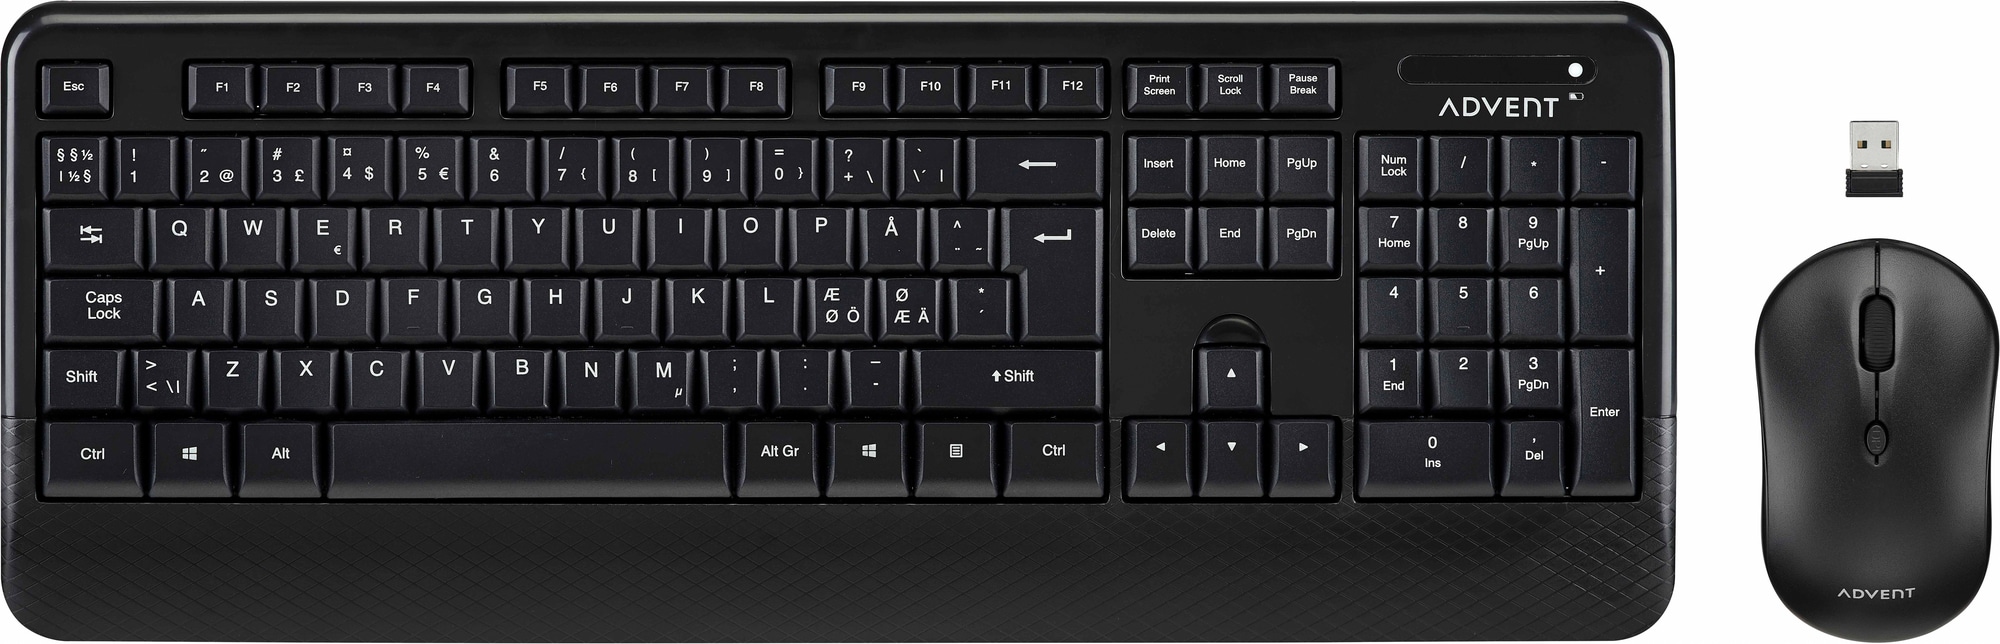 Advent trådløst tastatur og datamus - Elkjøp